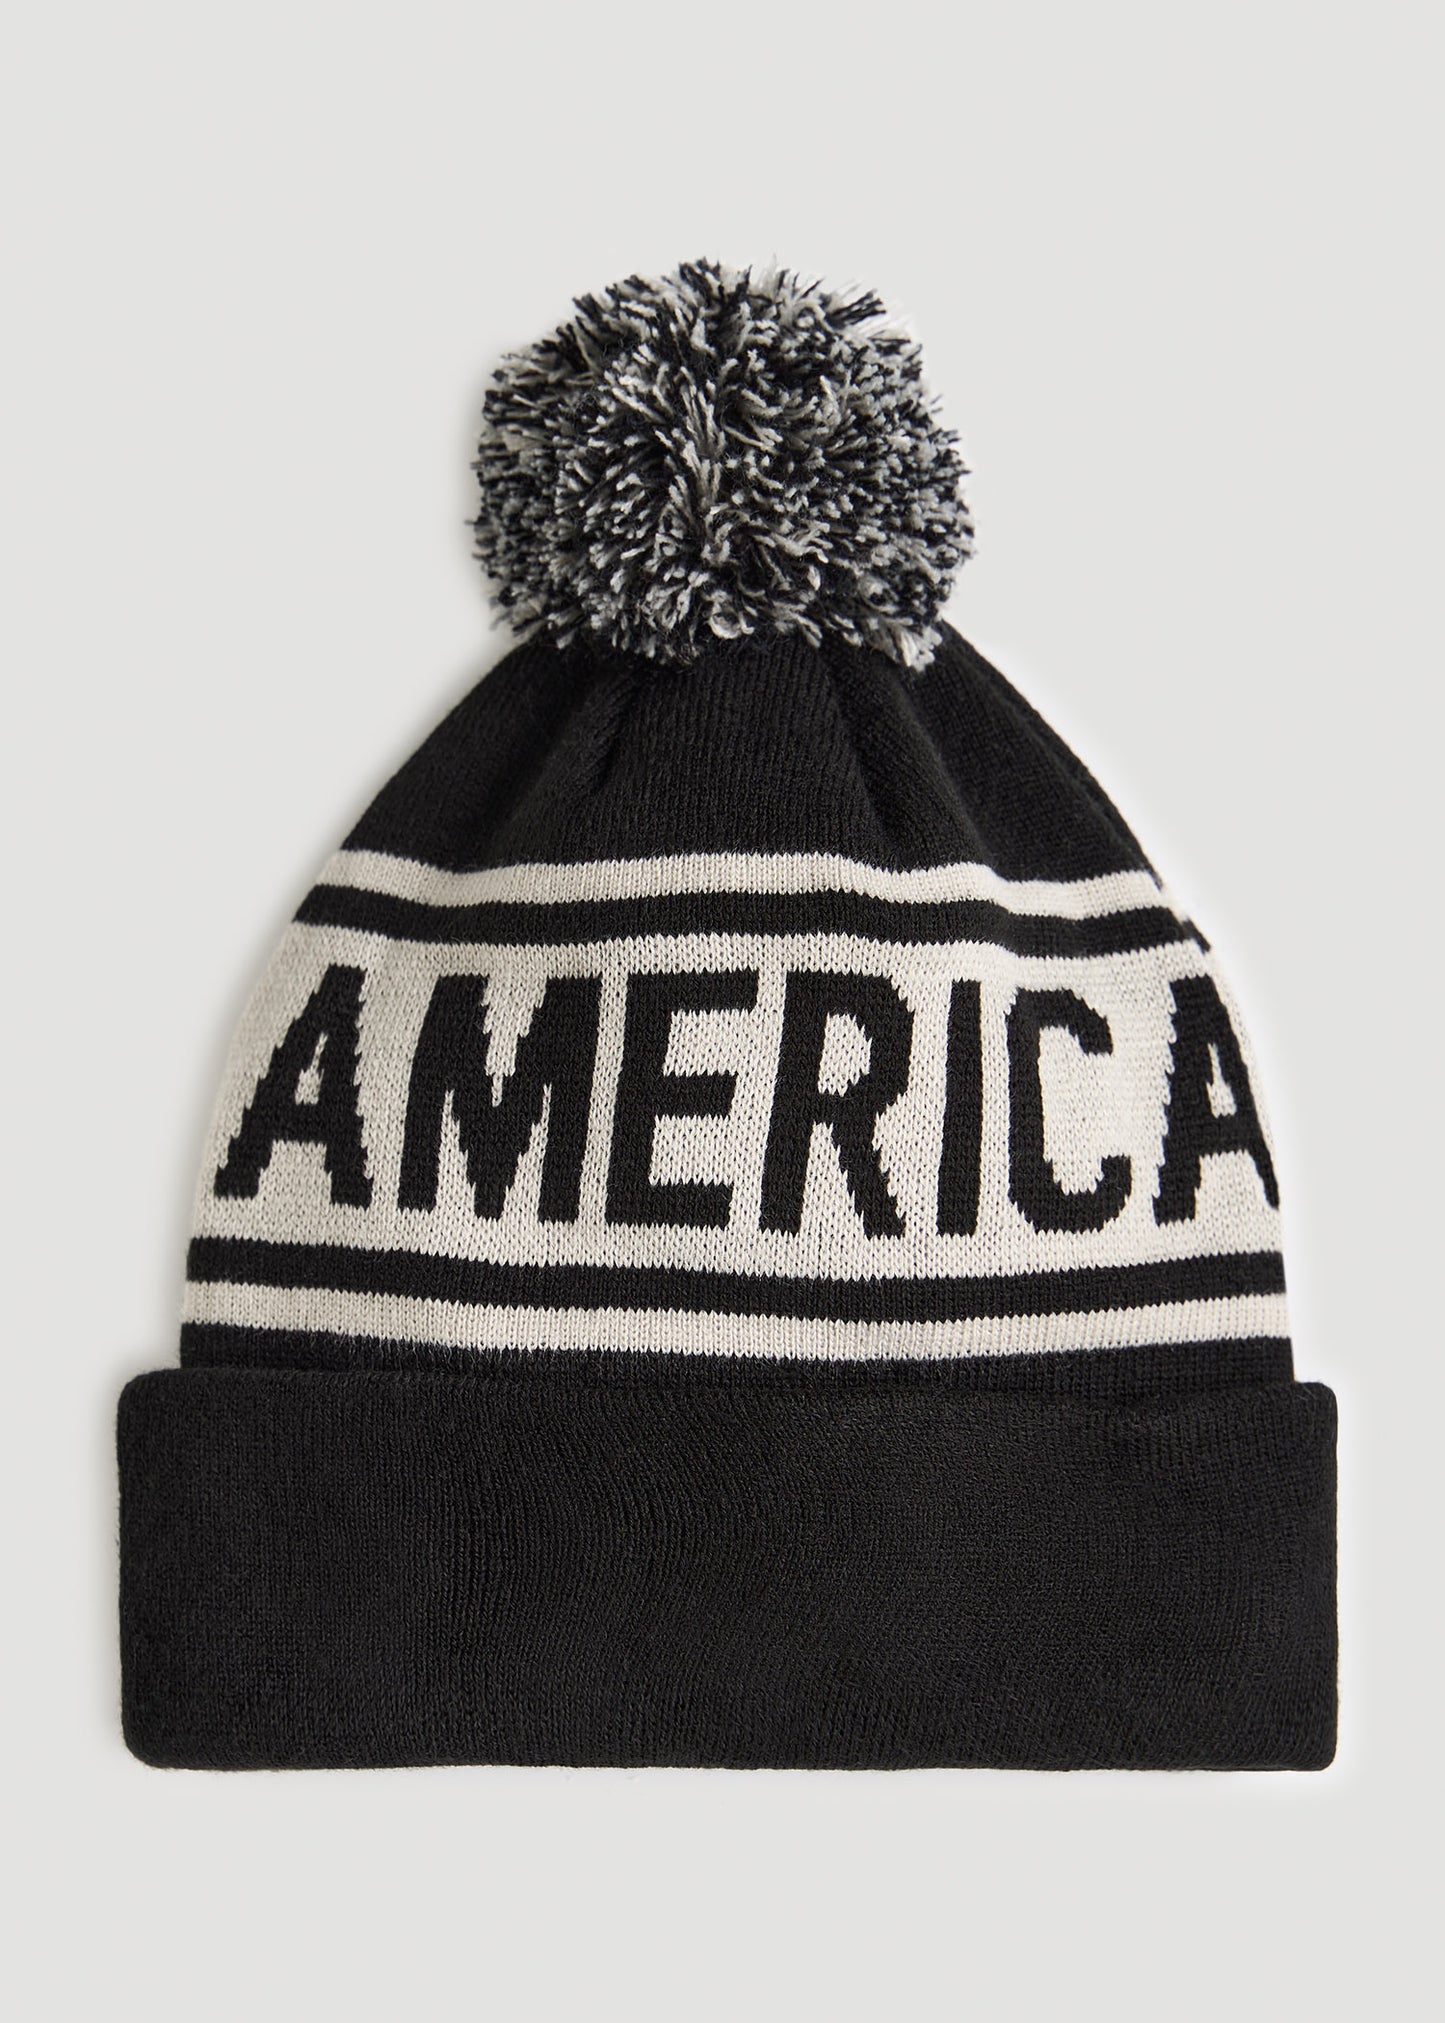    American-Tall-Jacquard-Knit-Pom-Pom-Hat-in-Black-Grey-front